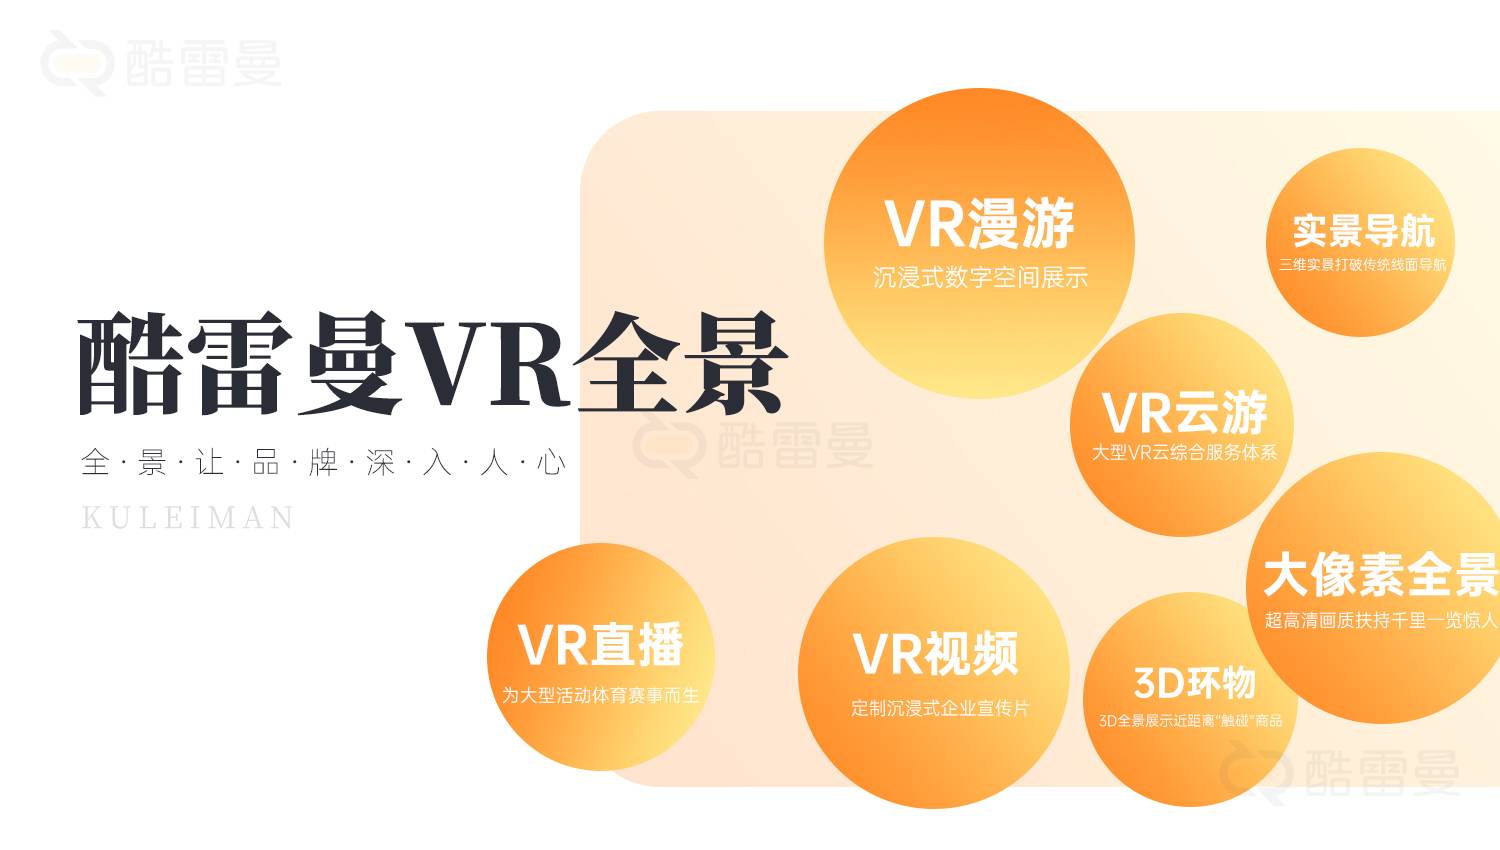 VR数字工厂，为企业工厂打造竞争新优势